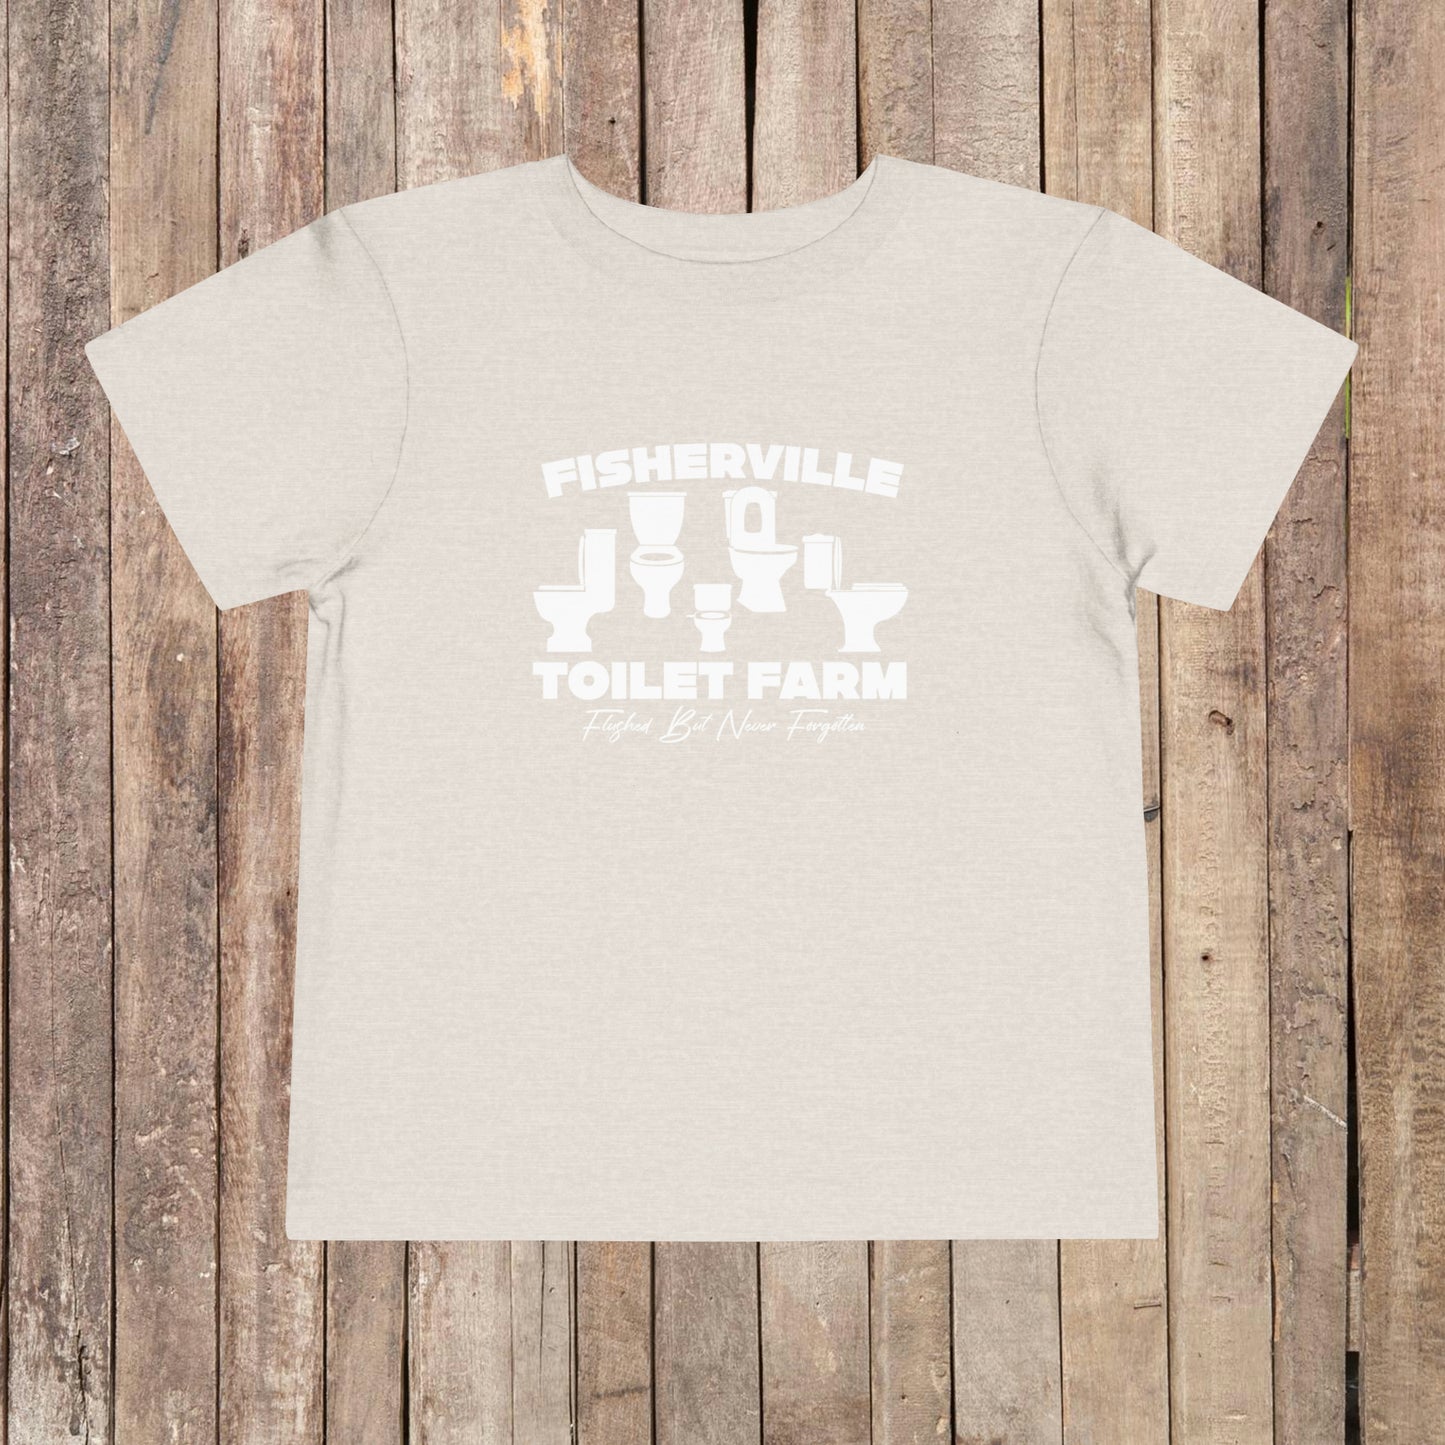 Fisherville Toilet Farm Toddler Short Sleeve Tee